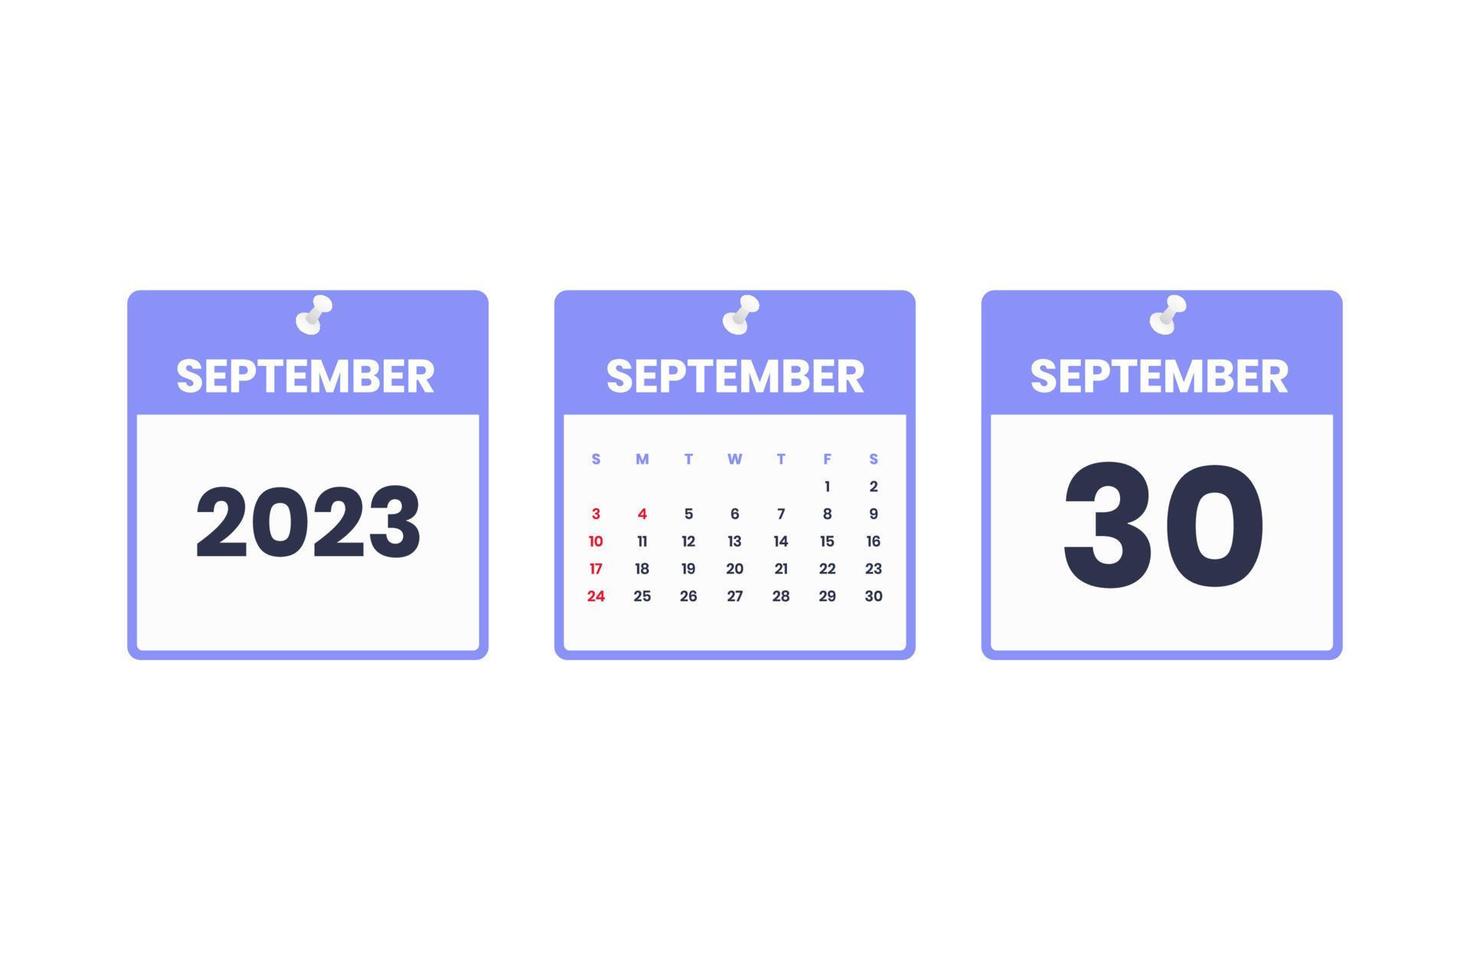 September calendar design. September 30 2023 calendar icon for schedule, appointment, important date concept vector